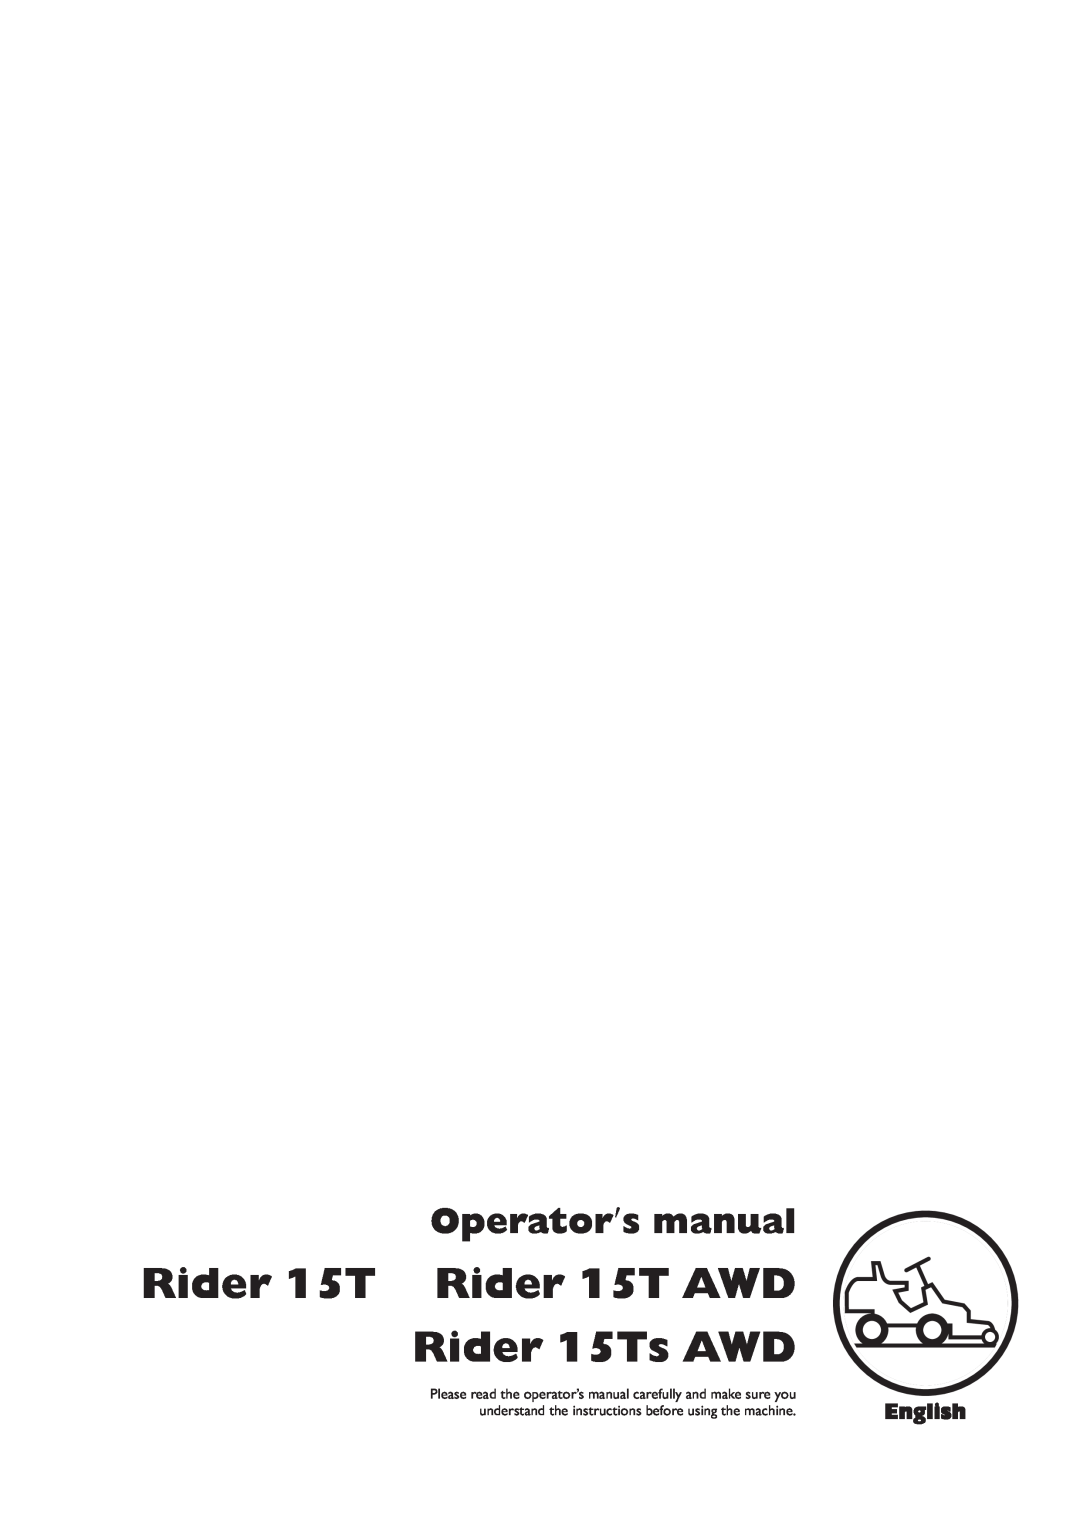 Husqvarna manual English, Rider 15T Rider 15T AWD Rider 15Ts AWD, Operator′s manual 